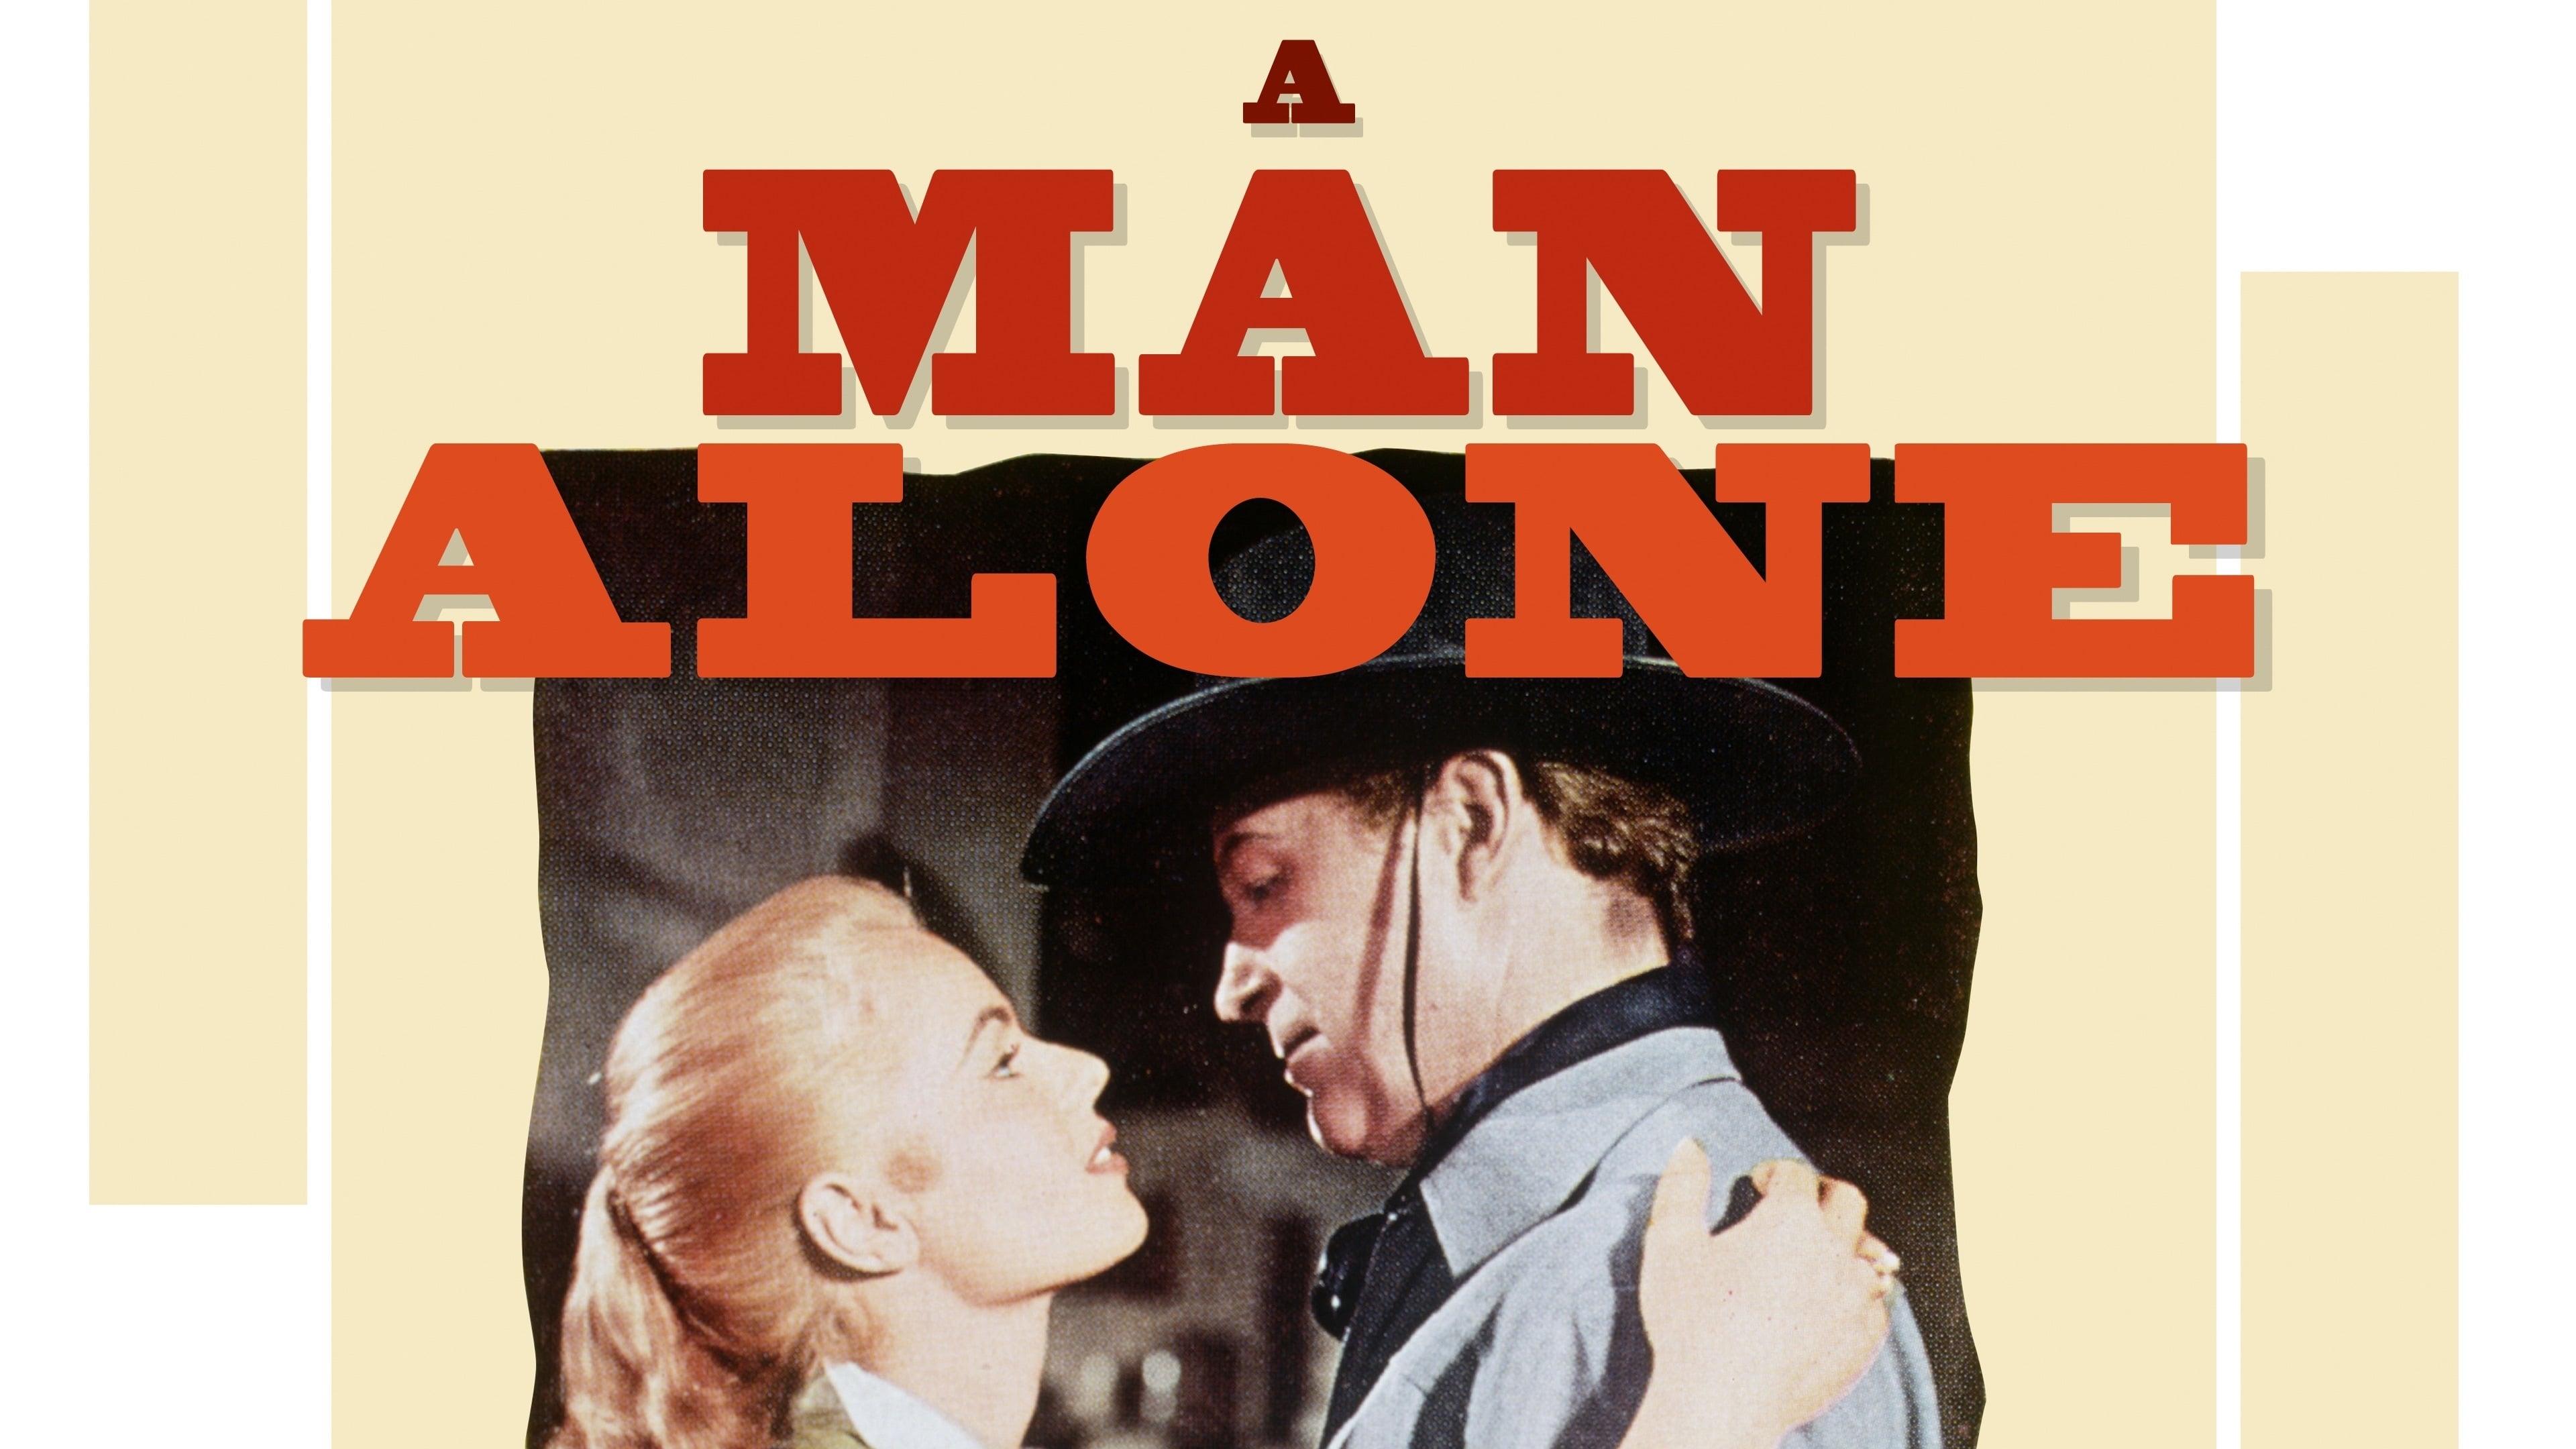 A Man Alone (1955)